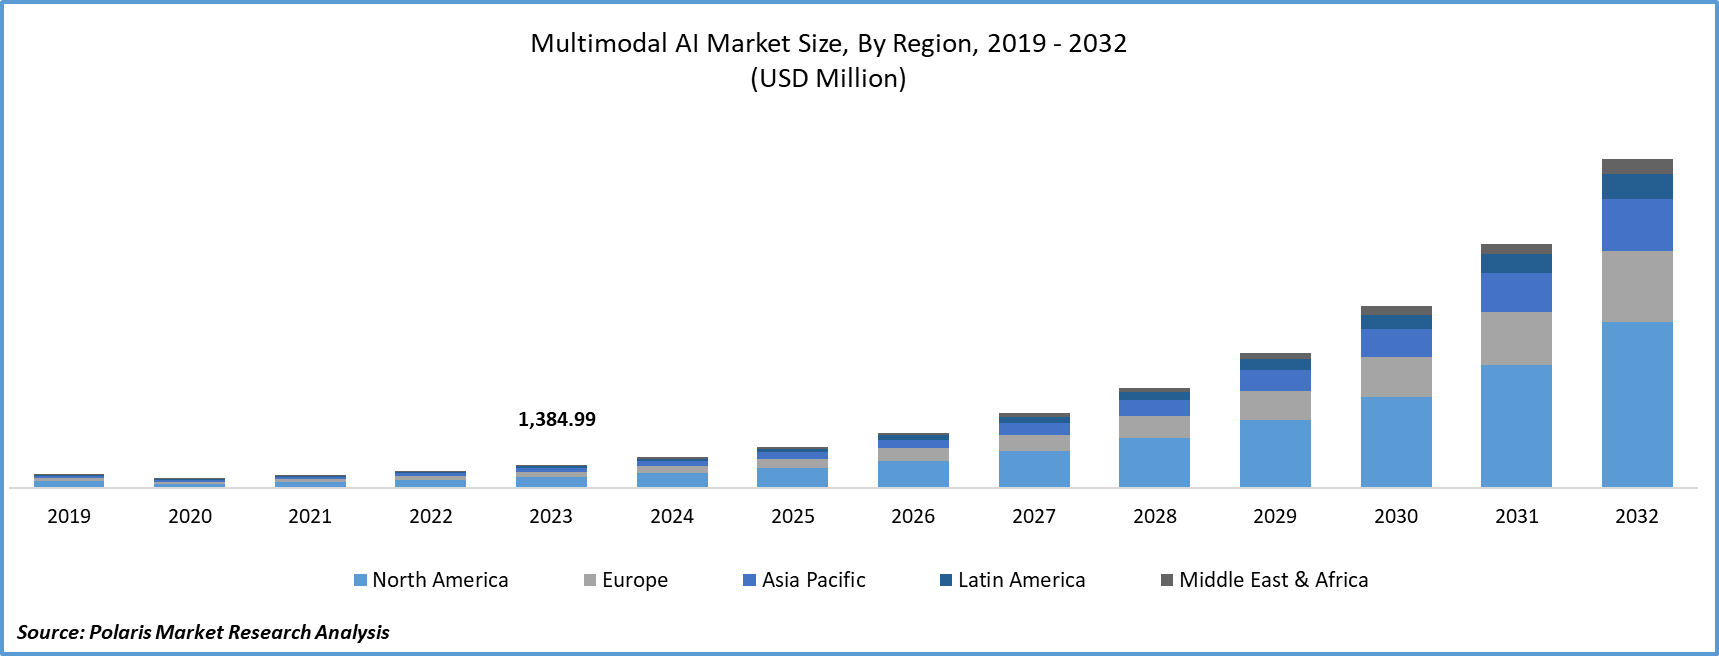 Multimodal AI Market Size